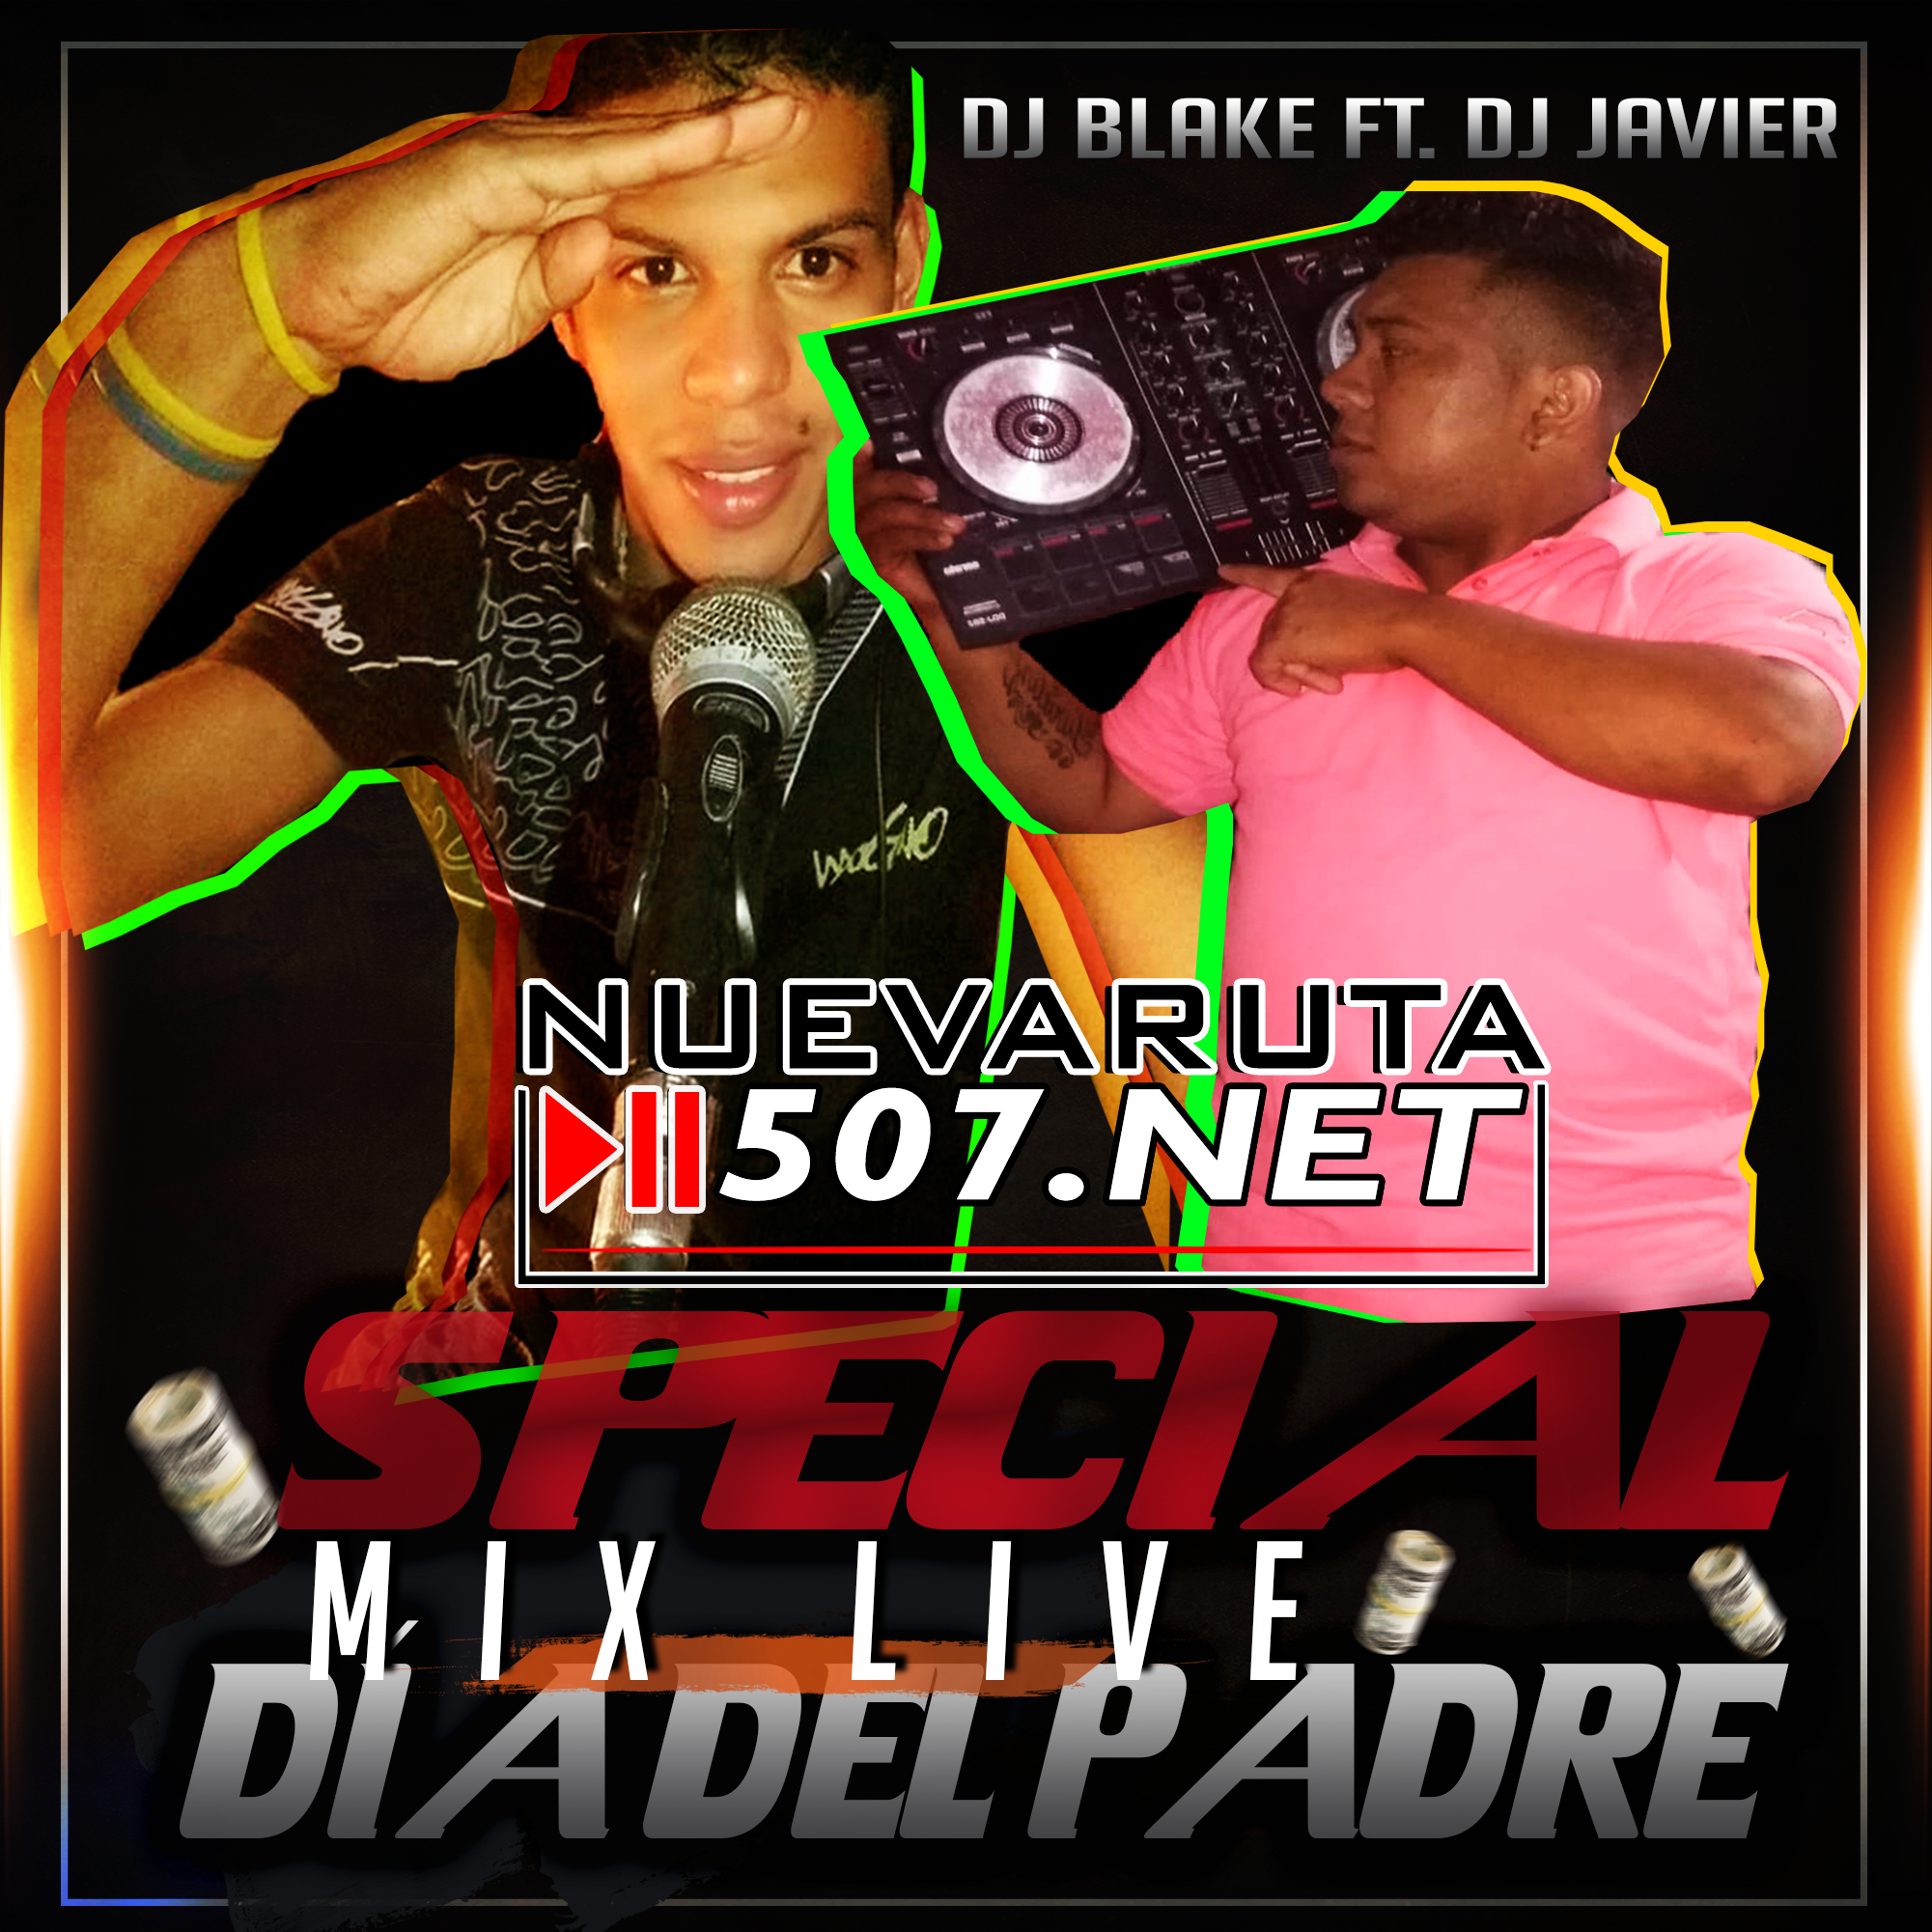 Dj Blake Ft. Dj Javier - Special Dia Del Padre Mix Live.mp3